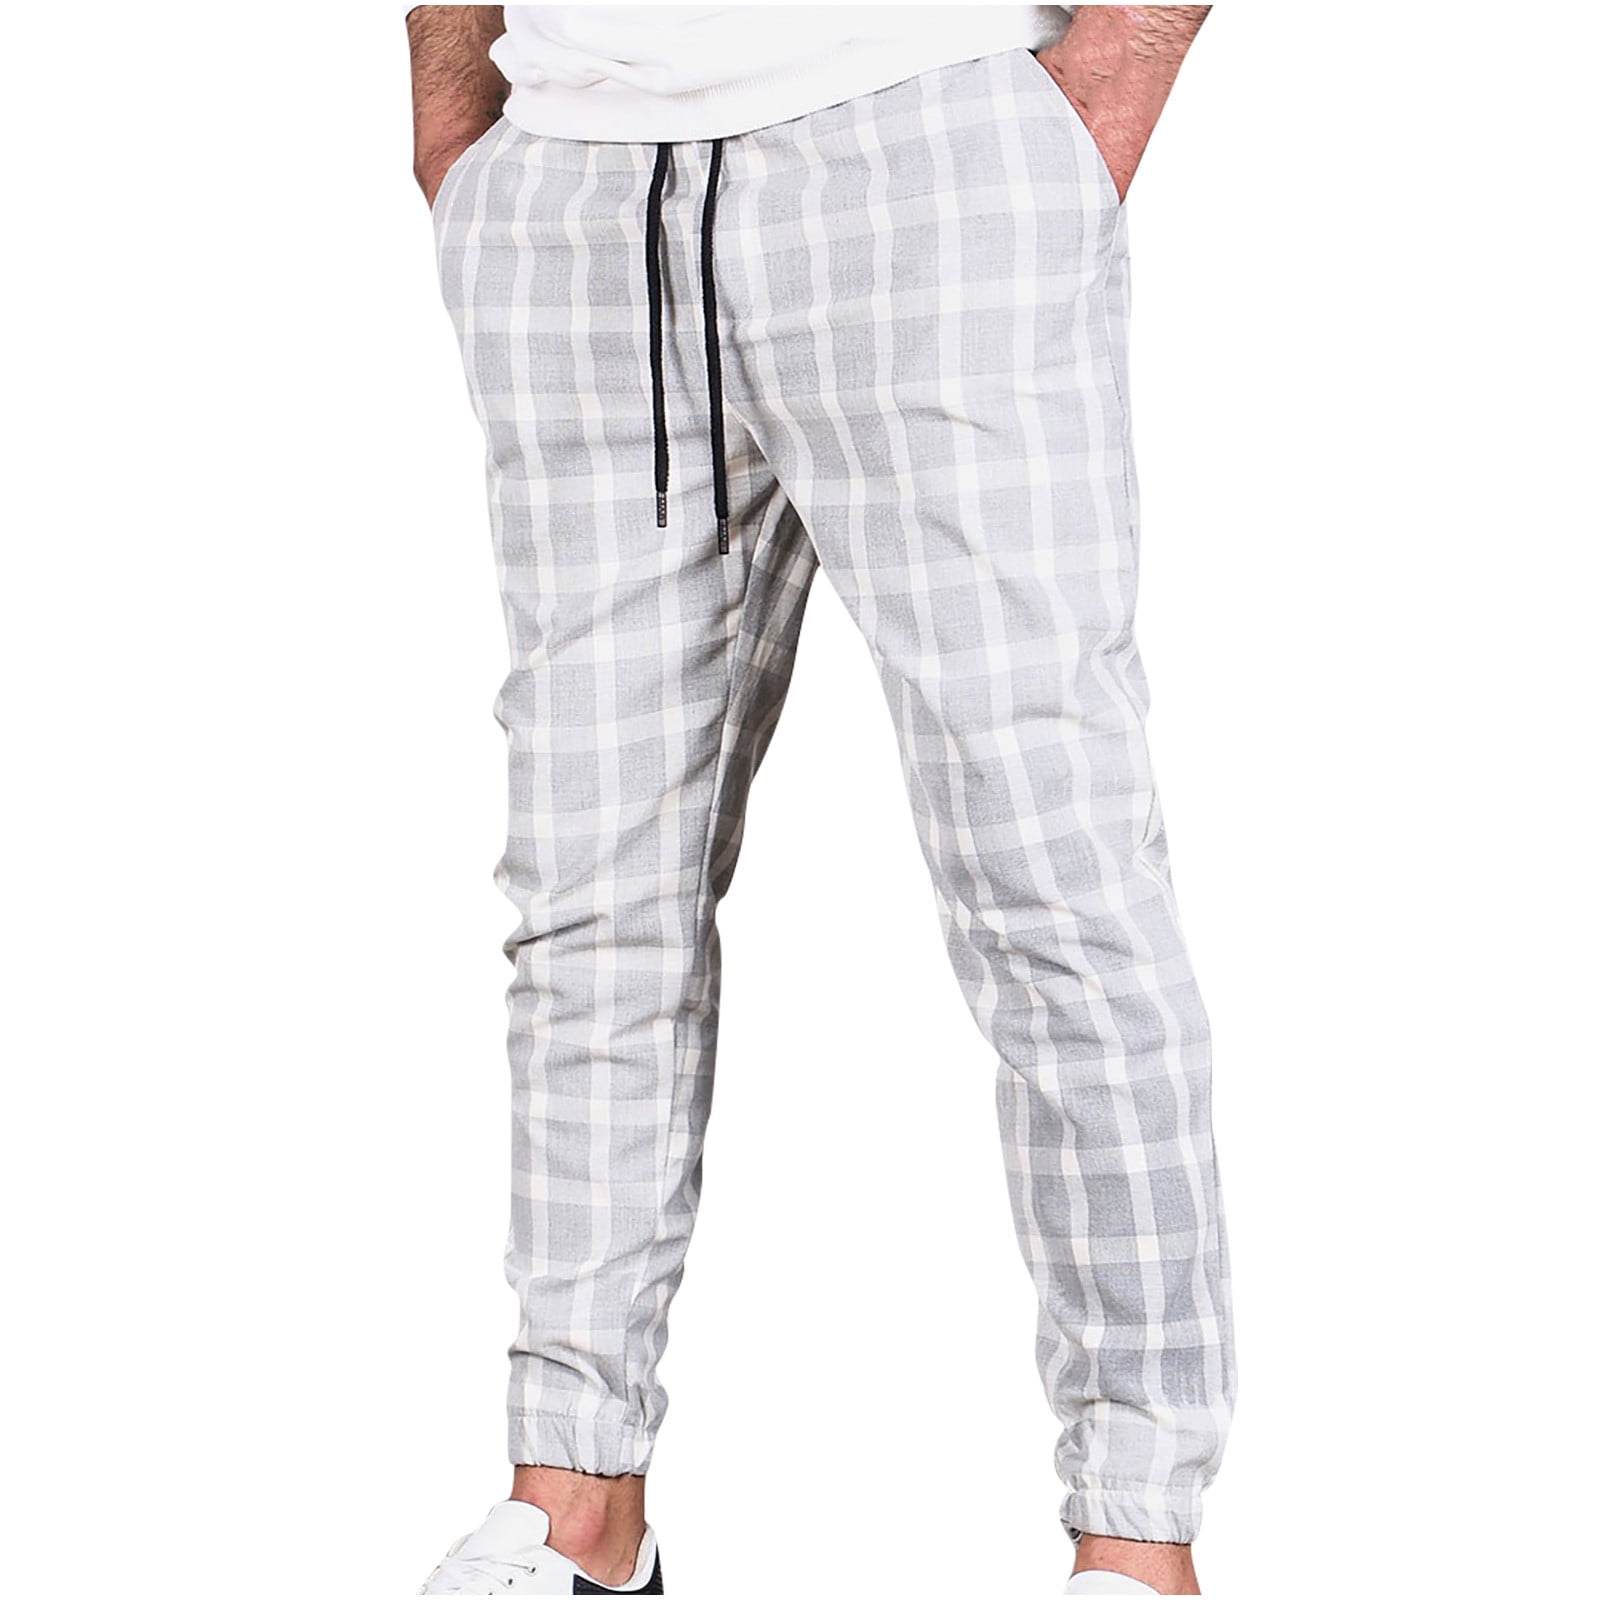 Maison Scotch Cargo Pants grey-black check pattern business style Fashion Trousers Cargo Pants 